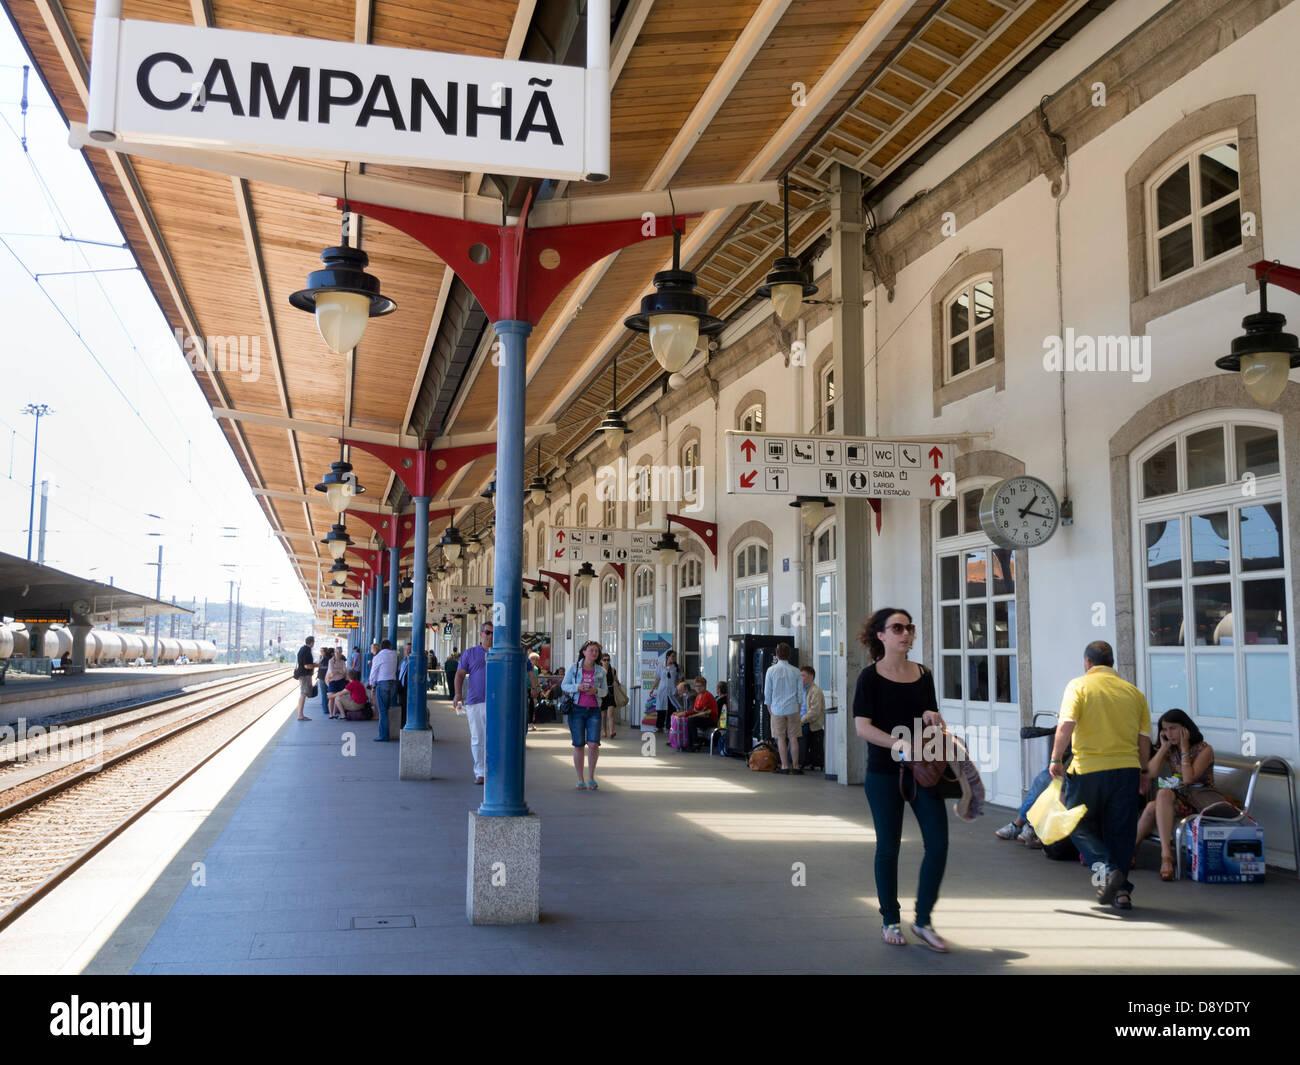 Campanhã railway station in Porto, northern Portugal, Europe Stock Photo -  Alamy